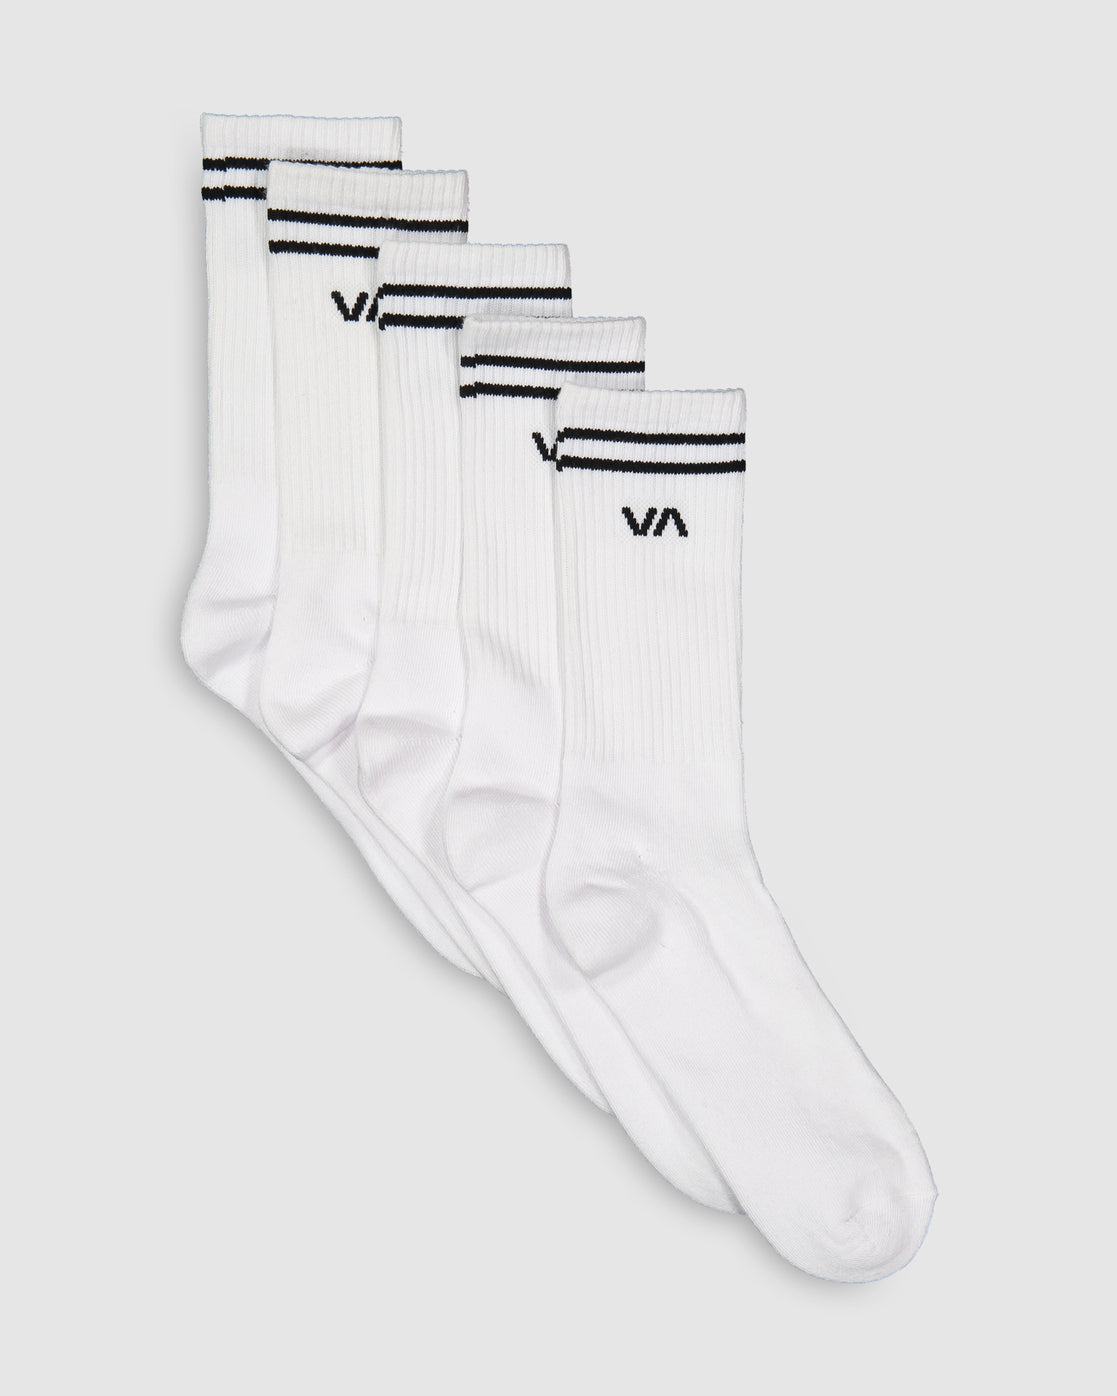 RVCA Union Sock Iii 5 Pack BLACK